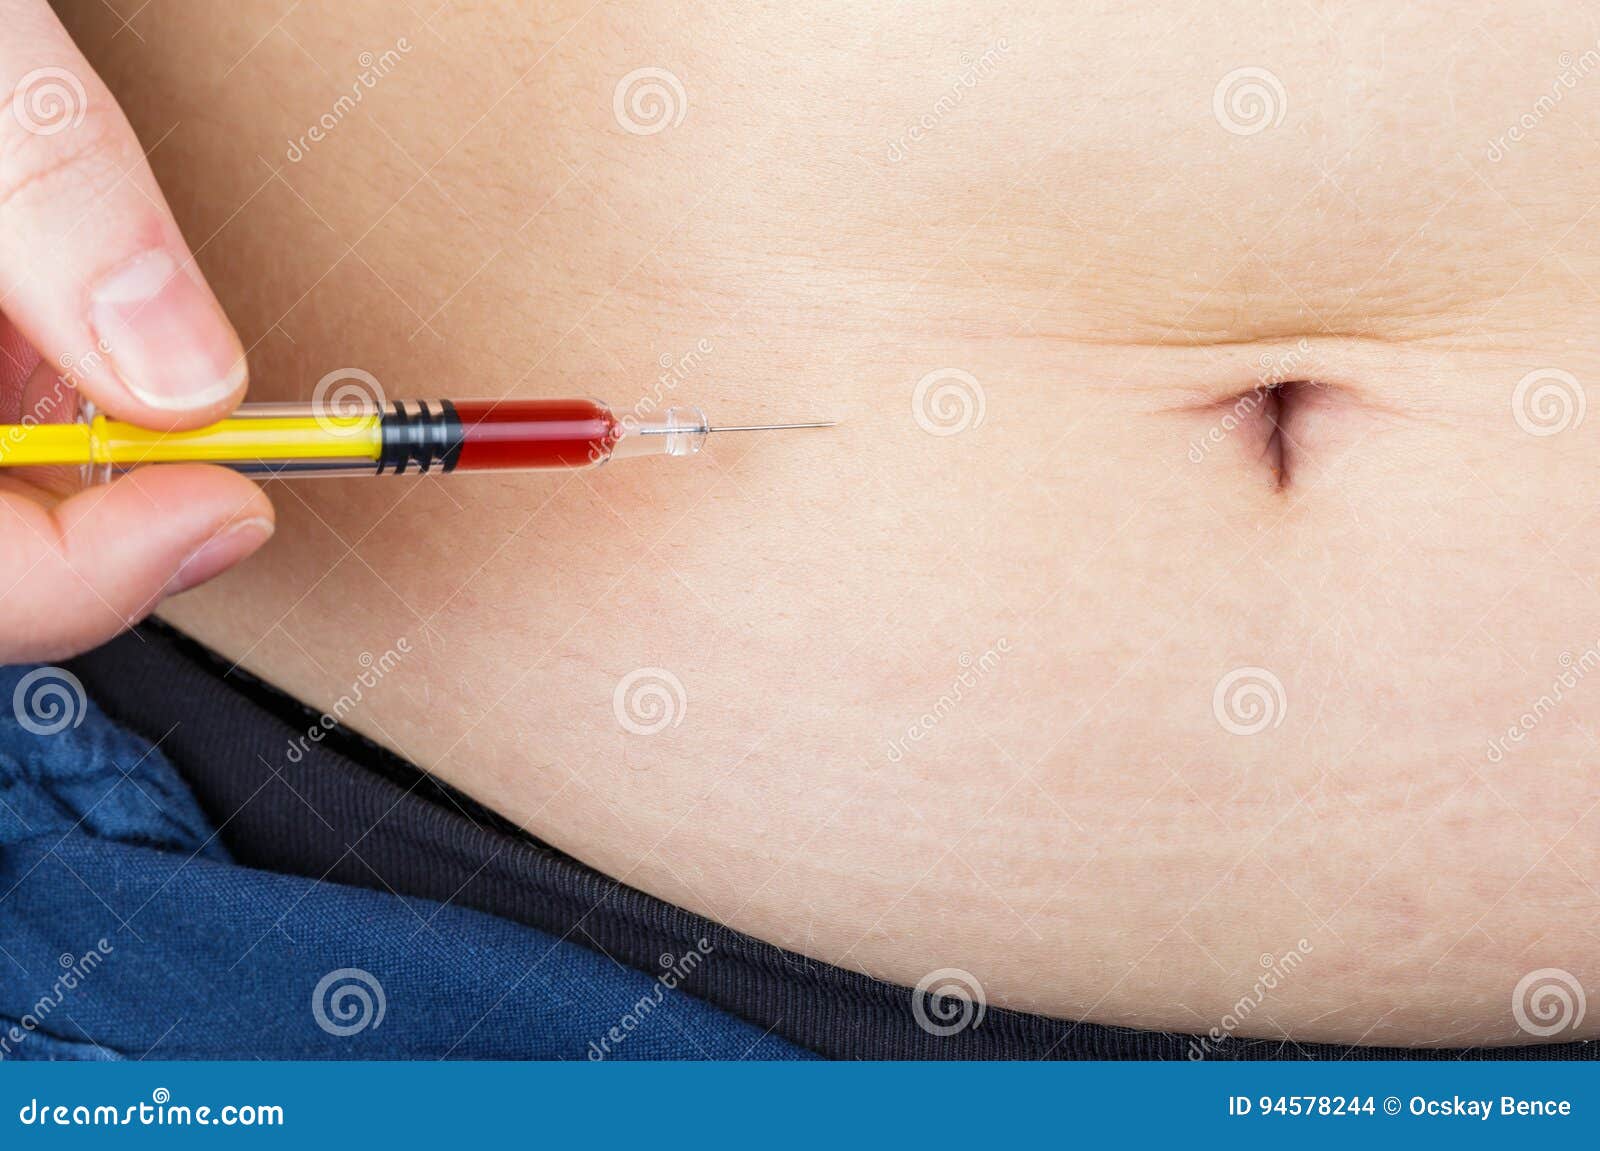 abdominal insulin injection